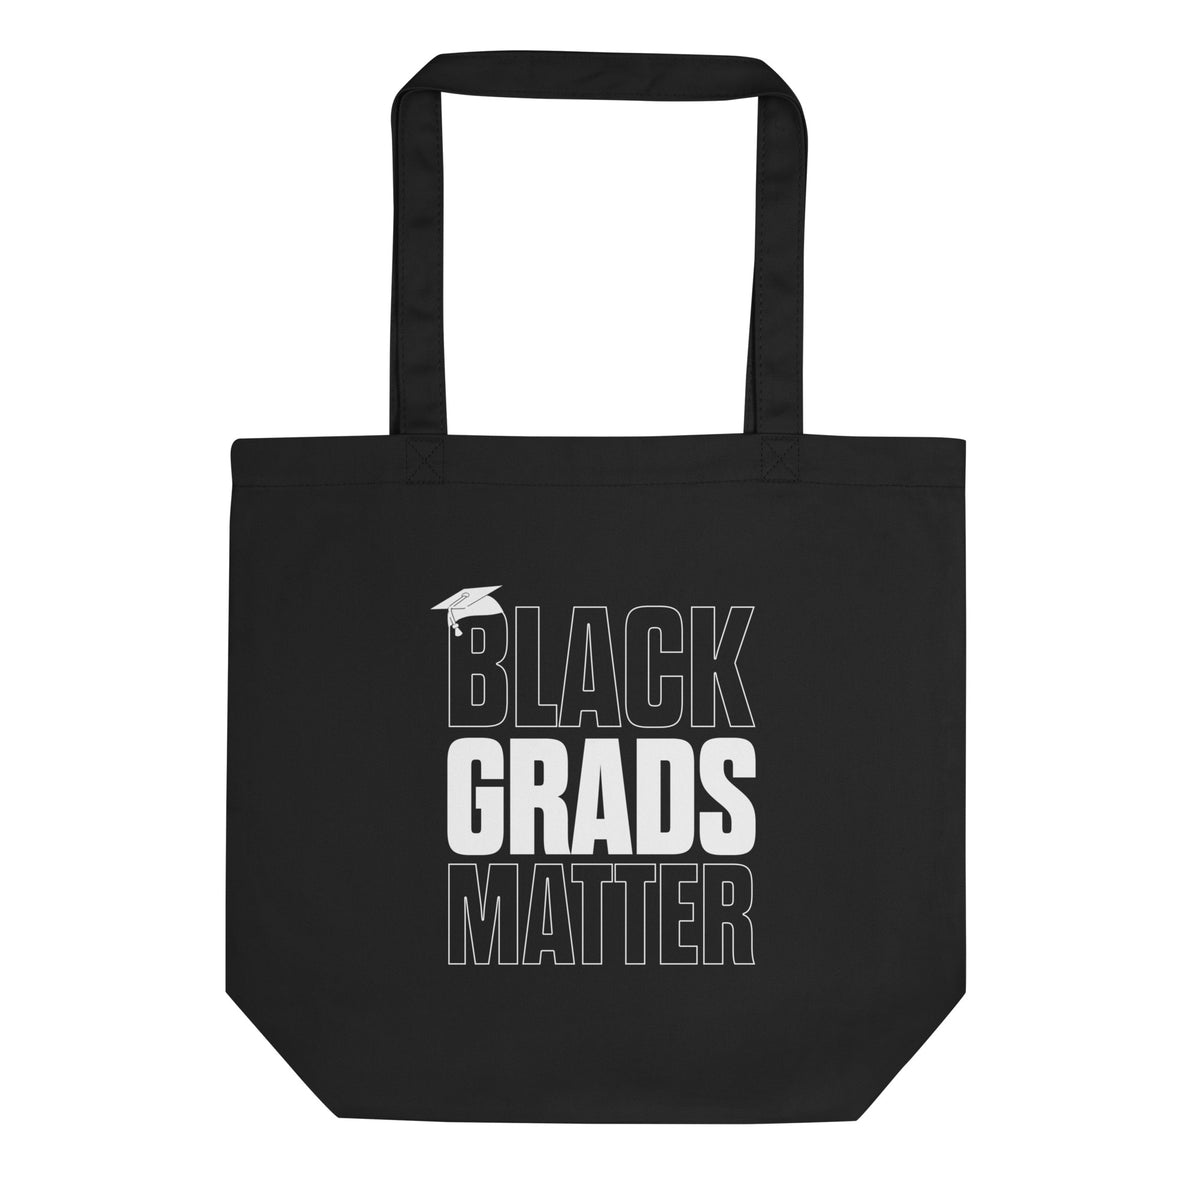 Black Grads Matter Tote Bag - HBCU Buzz Shop